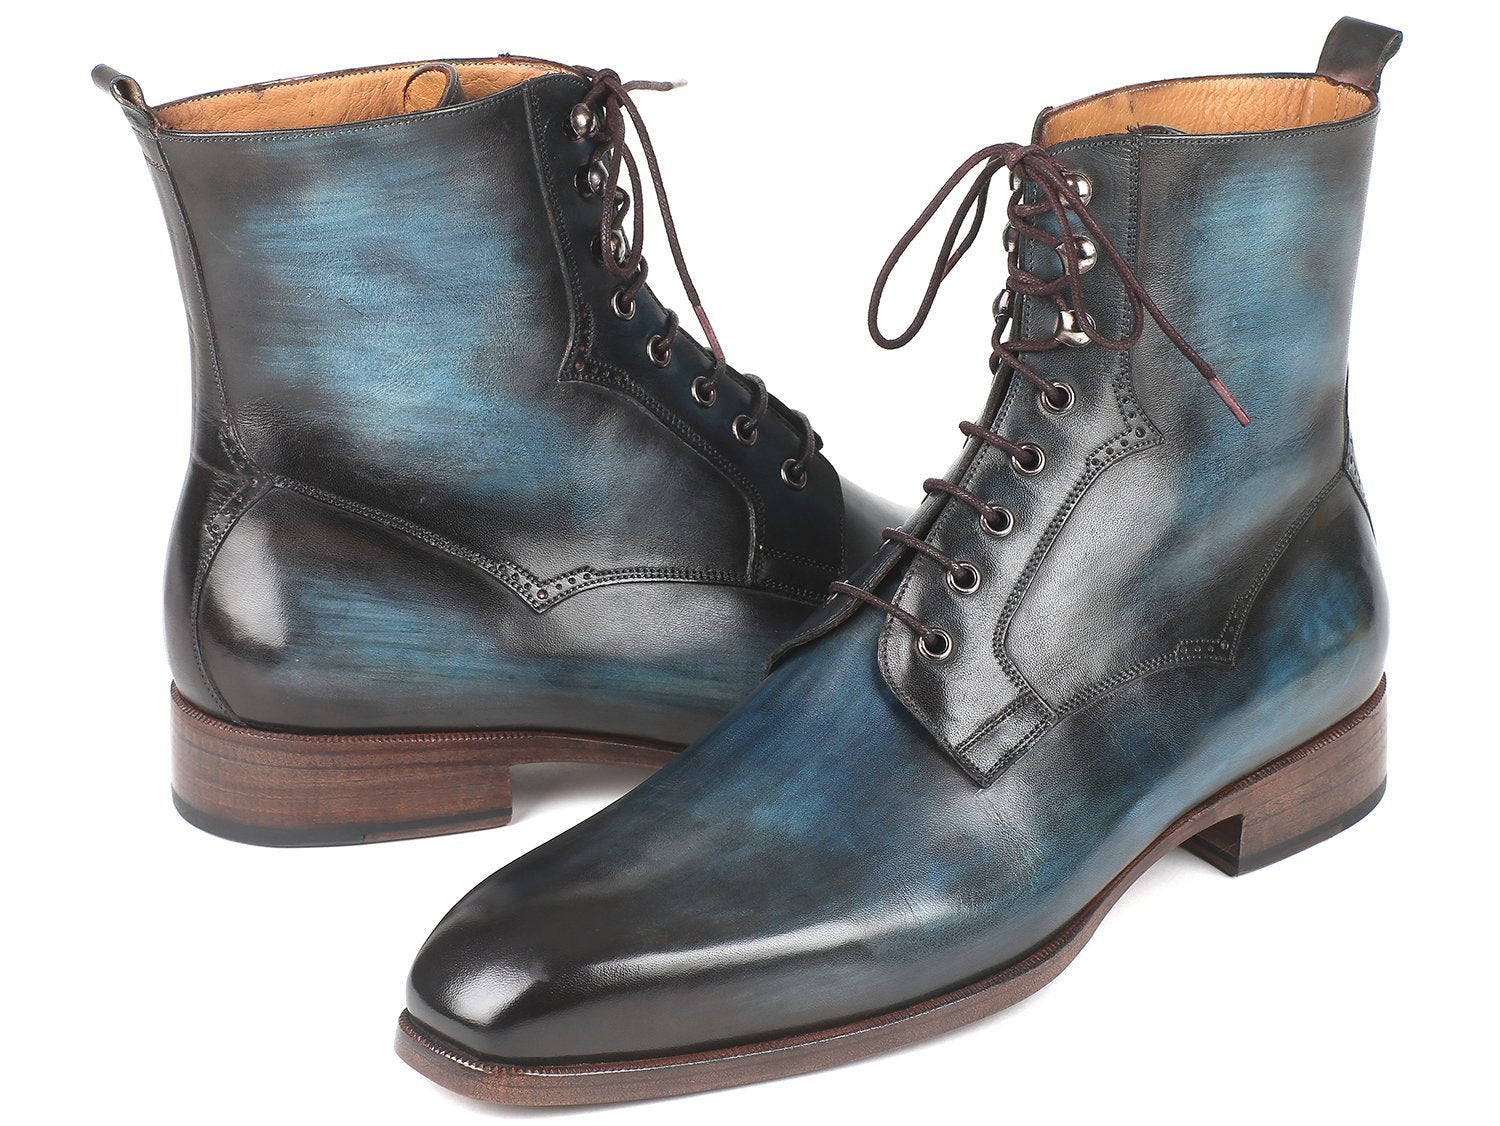 TEEK - Paul Parkman Blue & Brown Leather Boots SHOES theteekdotcom   